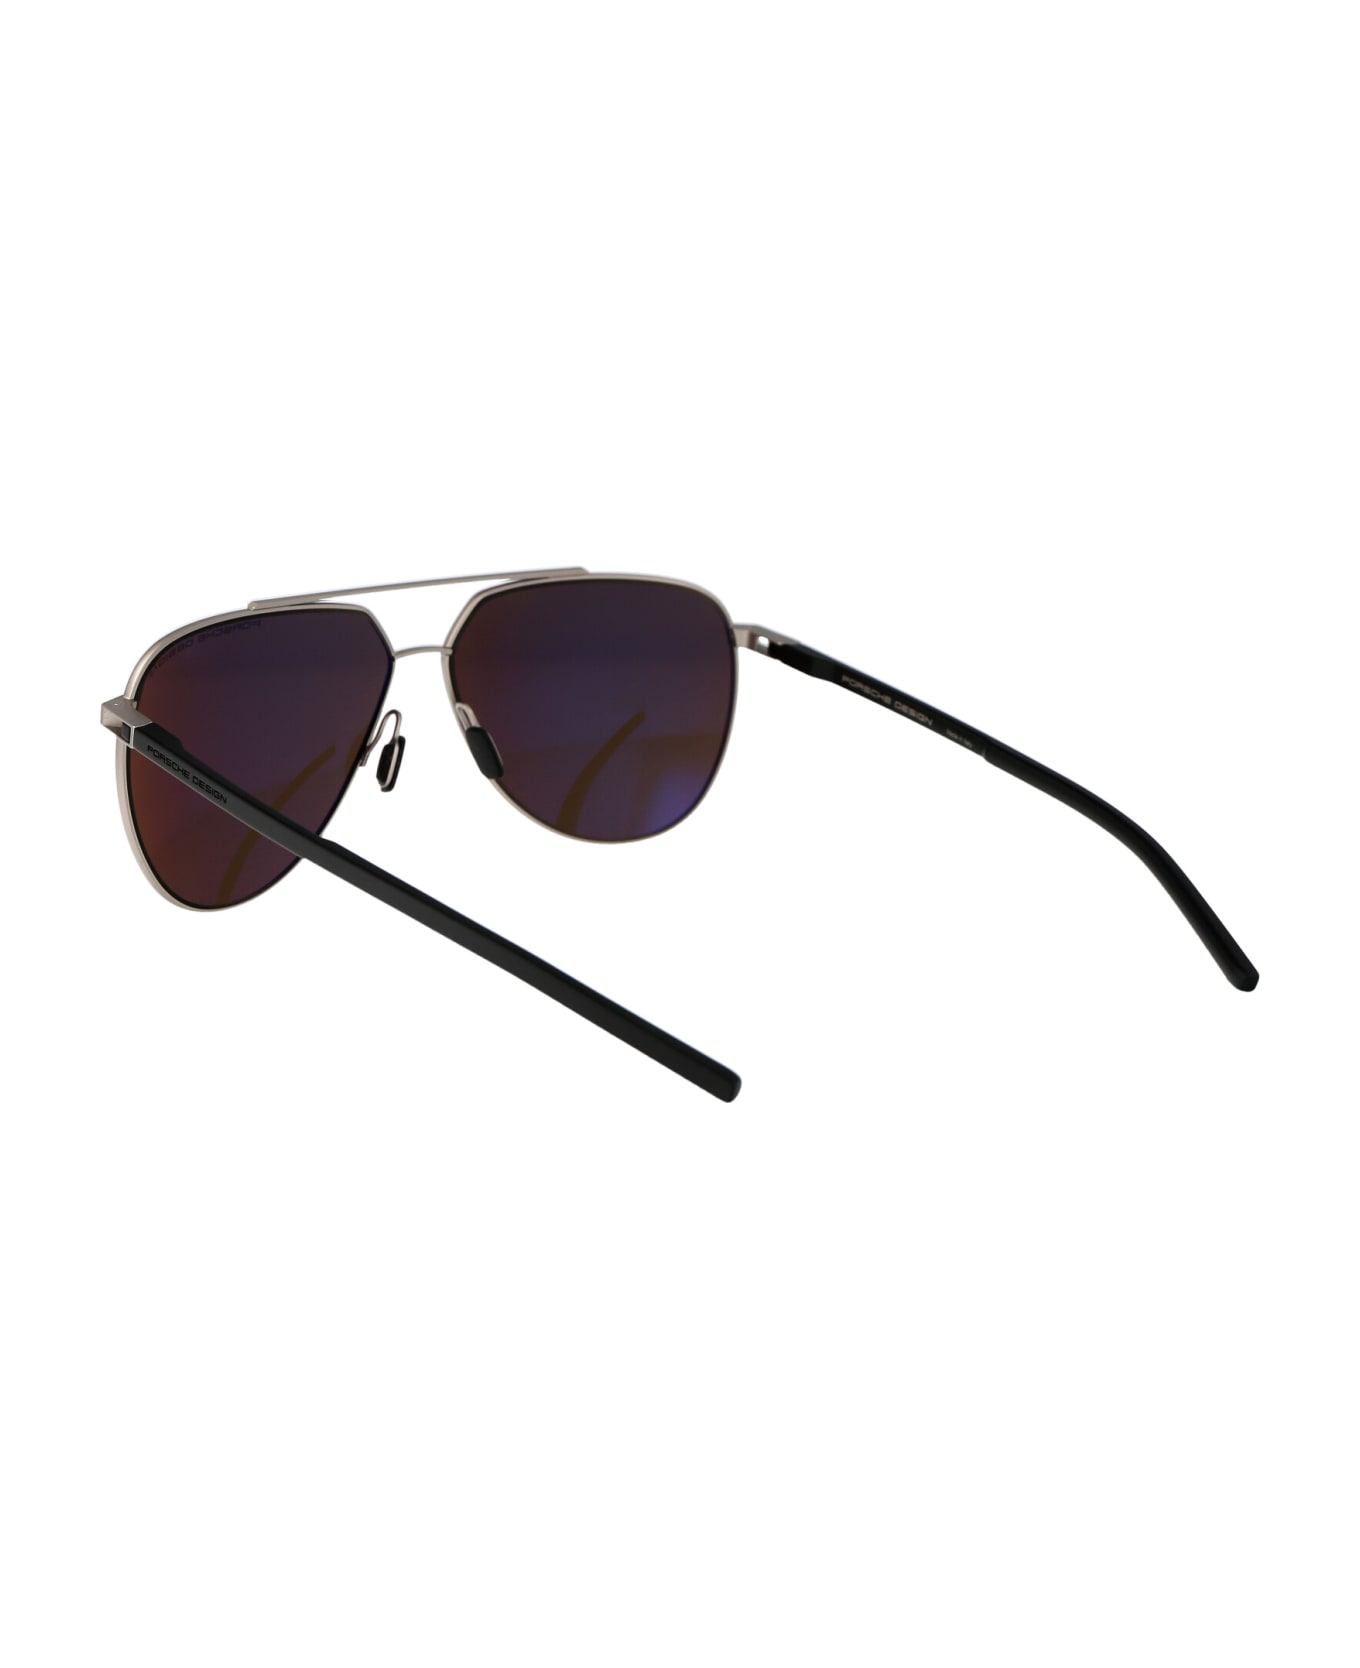 Porsche Design P8968 Sunglasses - D604 GREY/BLACK サングラス